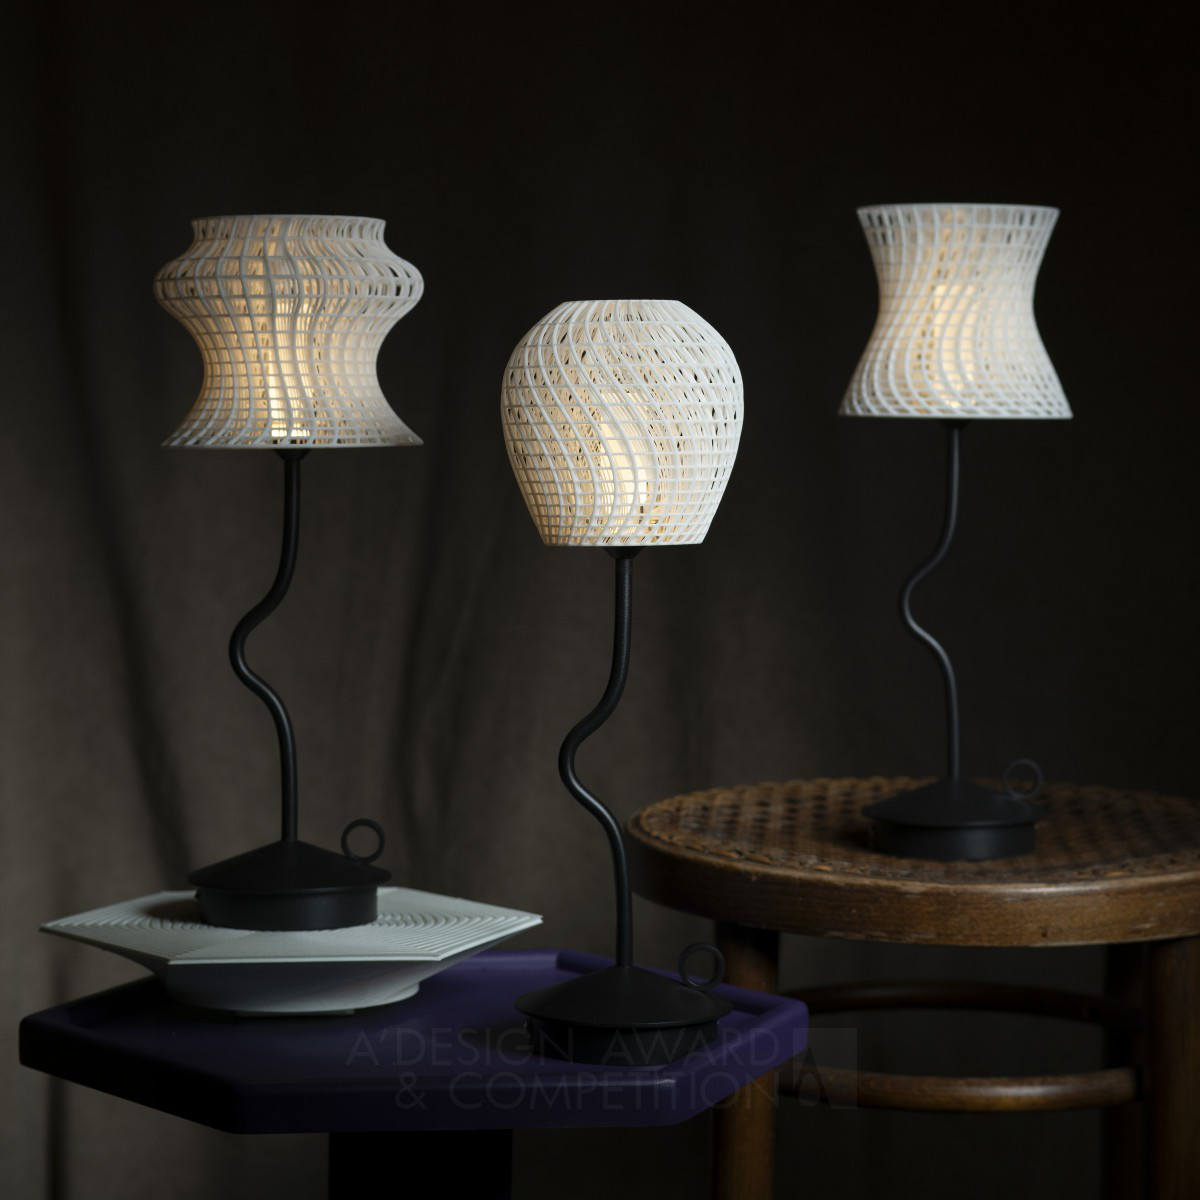 Quintessence Spectrum Series Portable Table Lamp by Jeffrey Geiringer